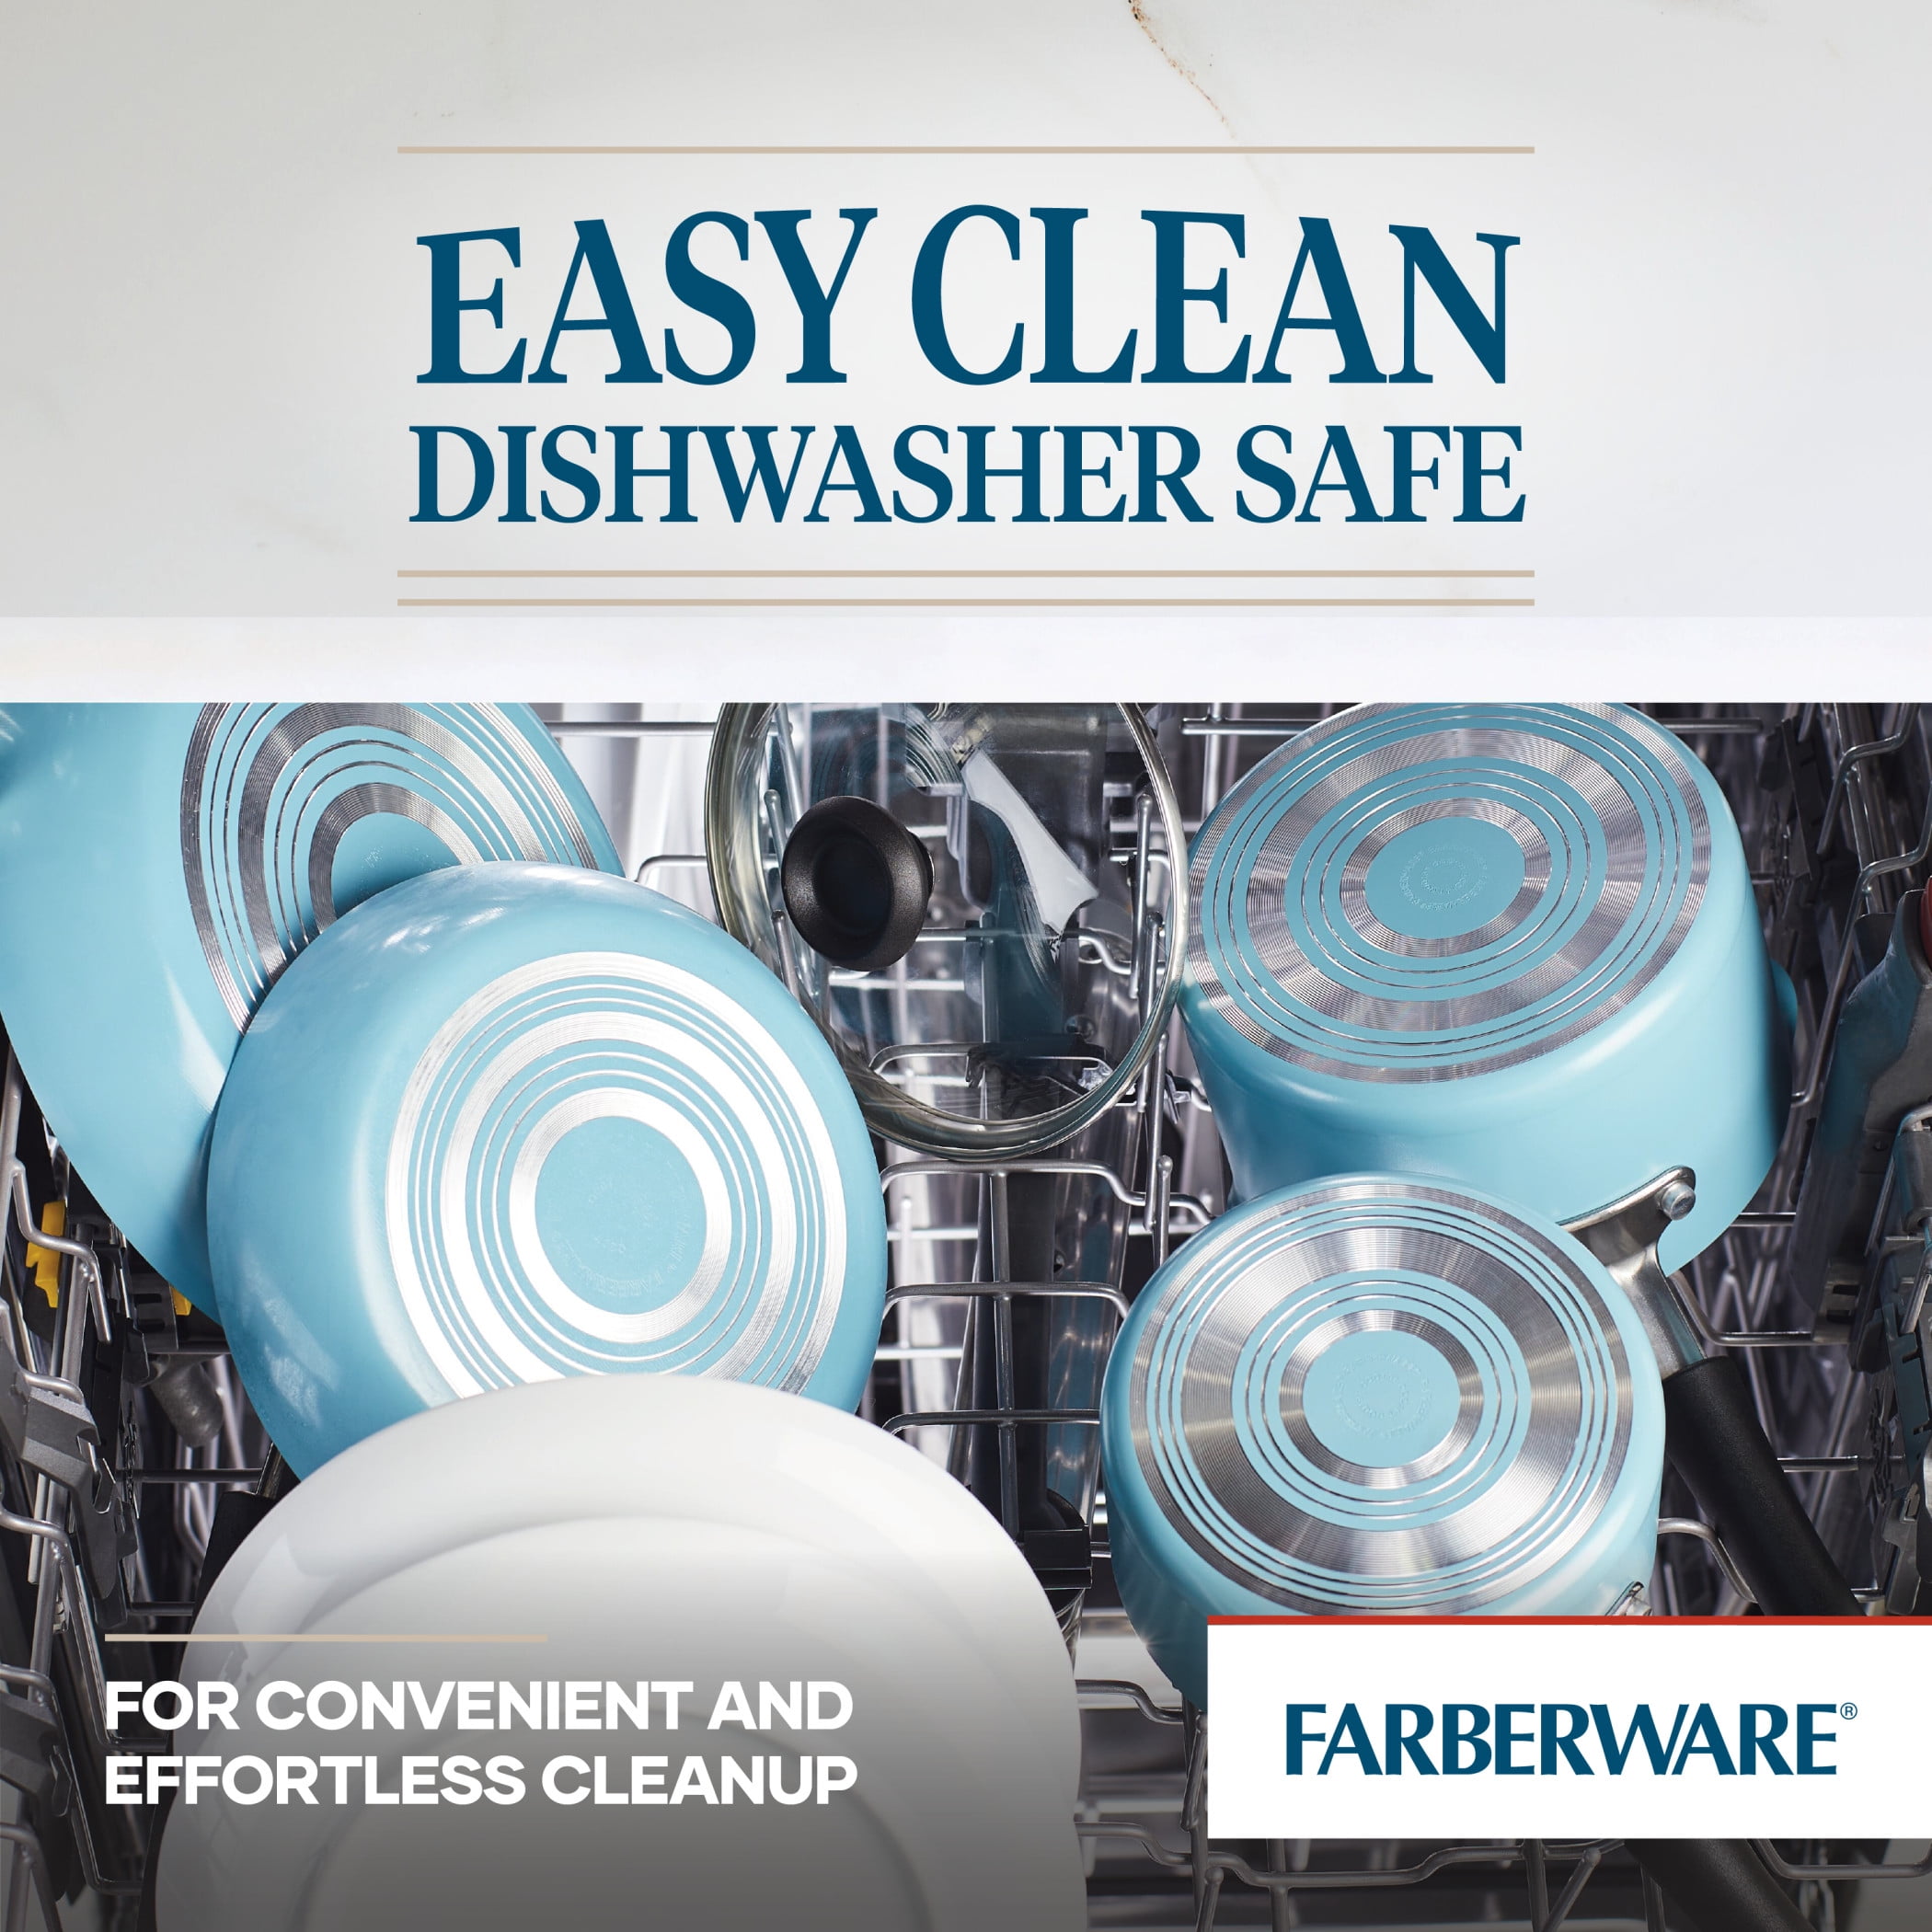 Farberware Dishwasher Safe Nonstick Aluminum 6-Quart Covered Jumbo Cooker with Helper Handle, Champagne